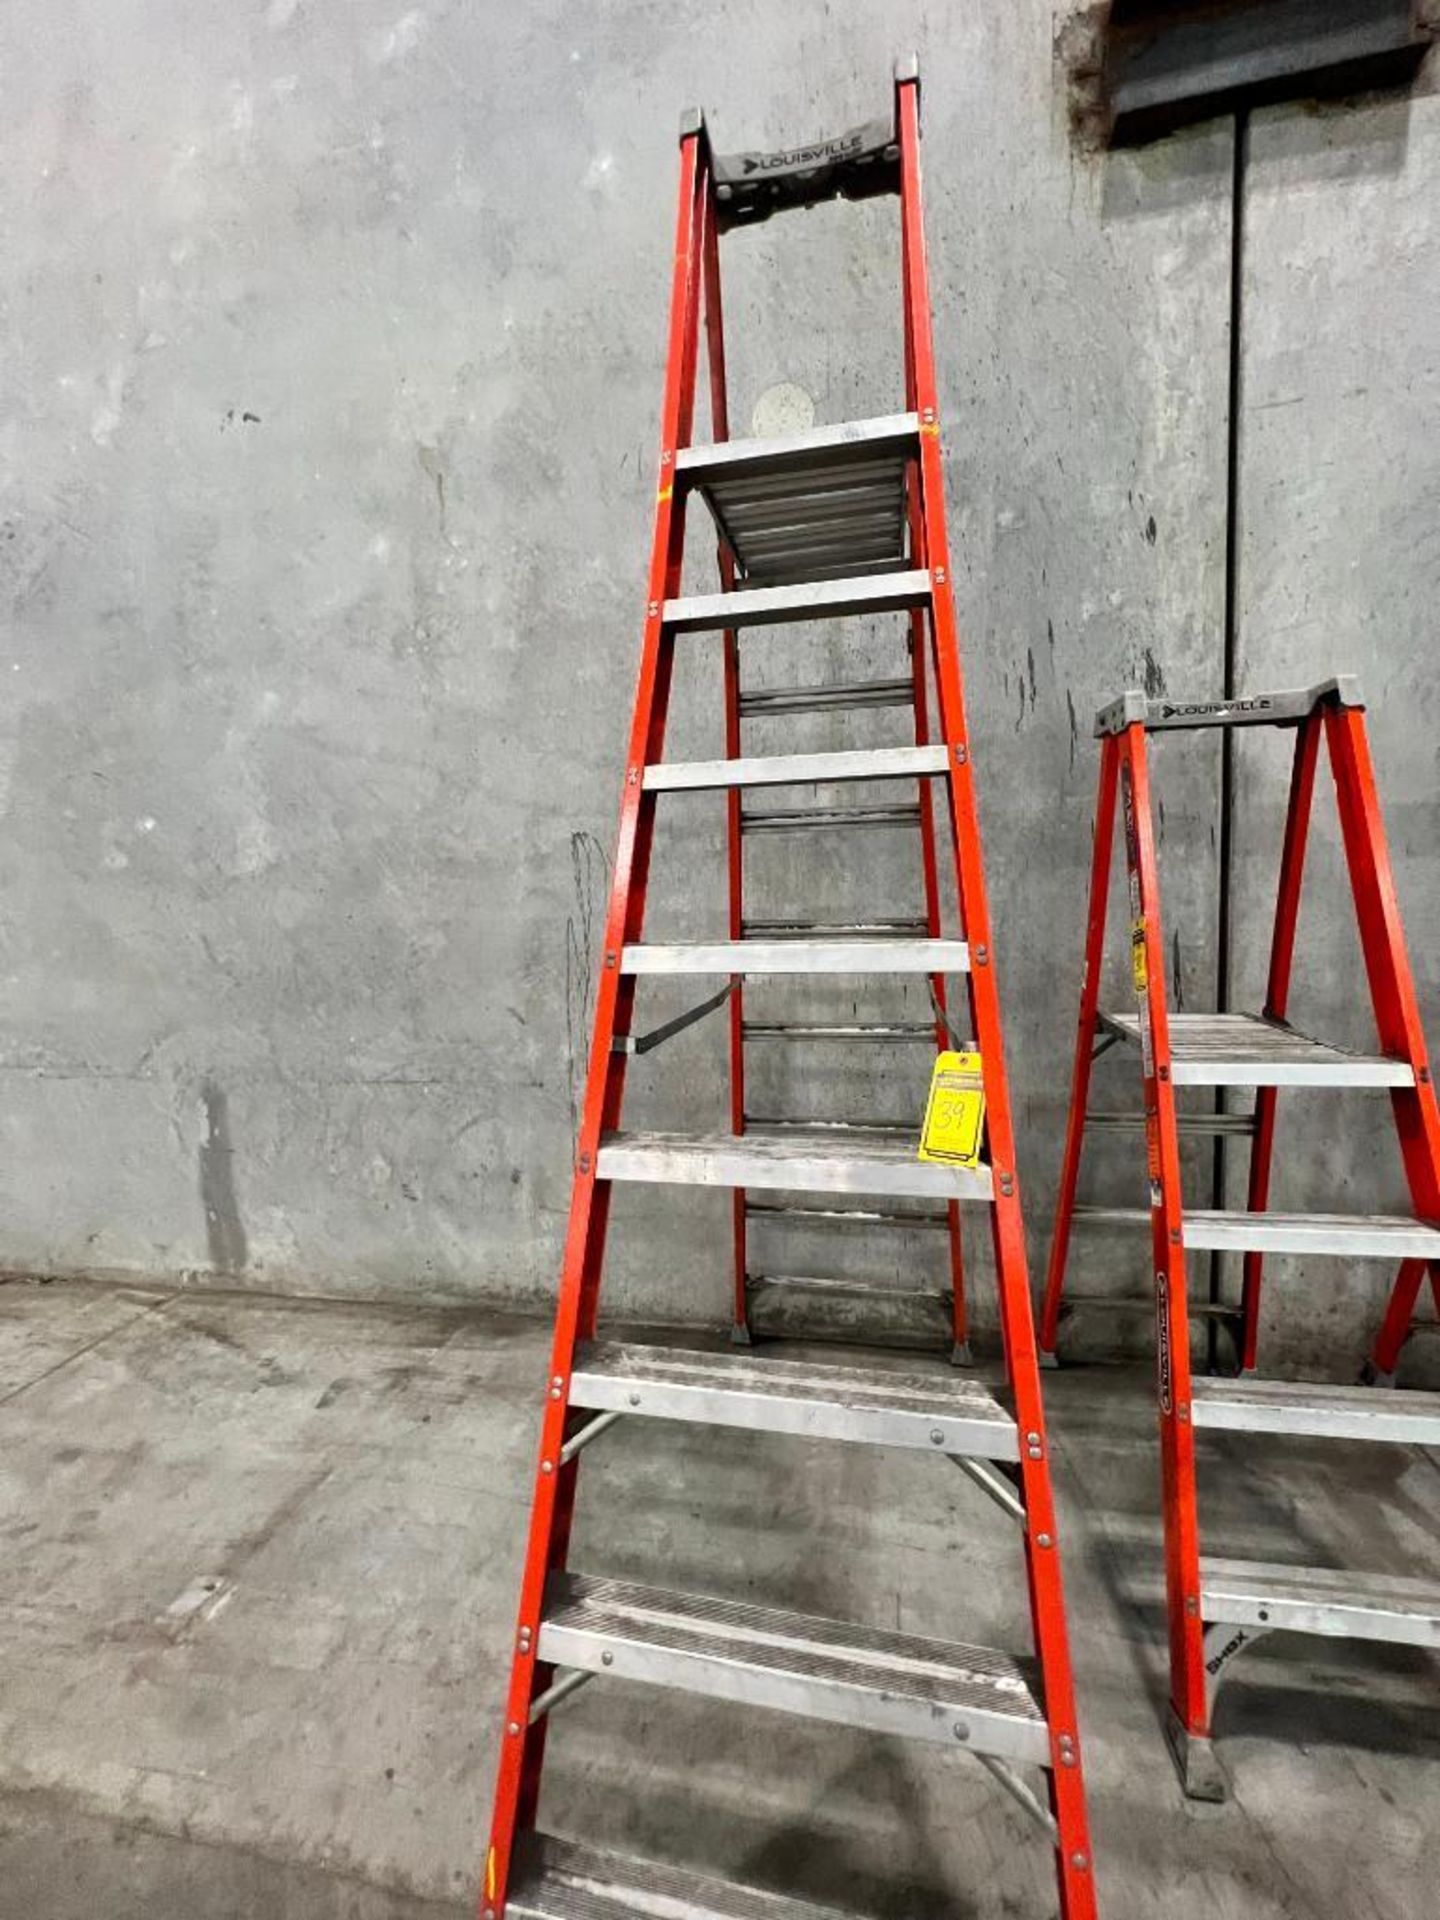 Louisville 8' Ladder, 300 LB. Max., Model FXP1708 - Image 2 of 4